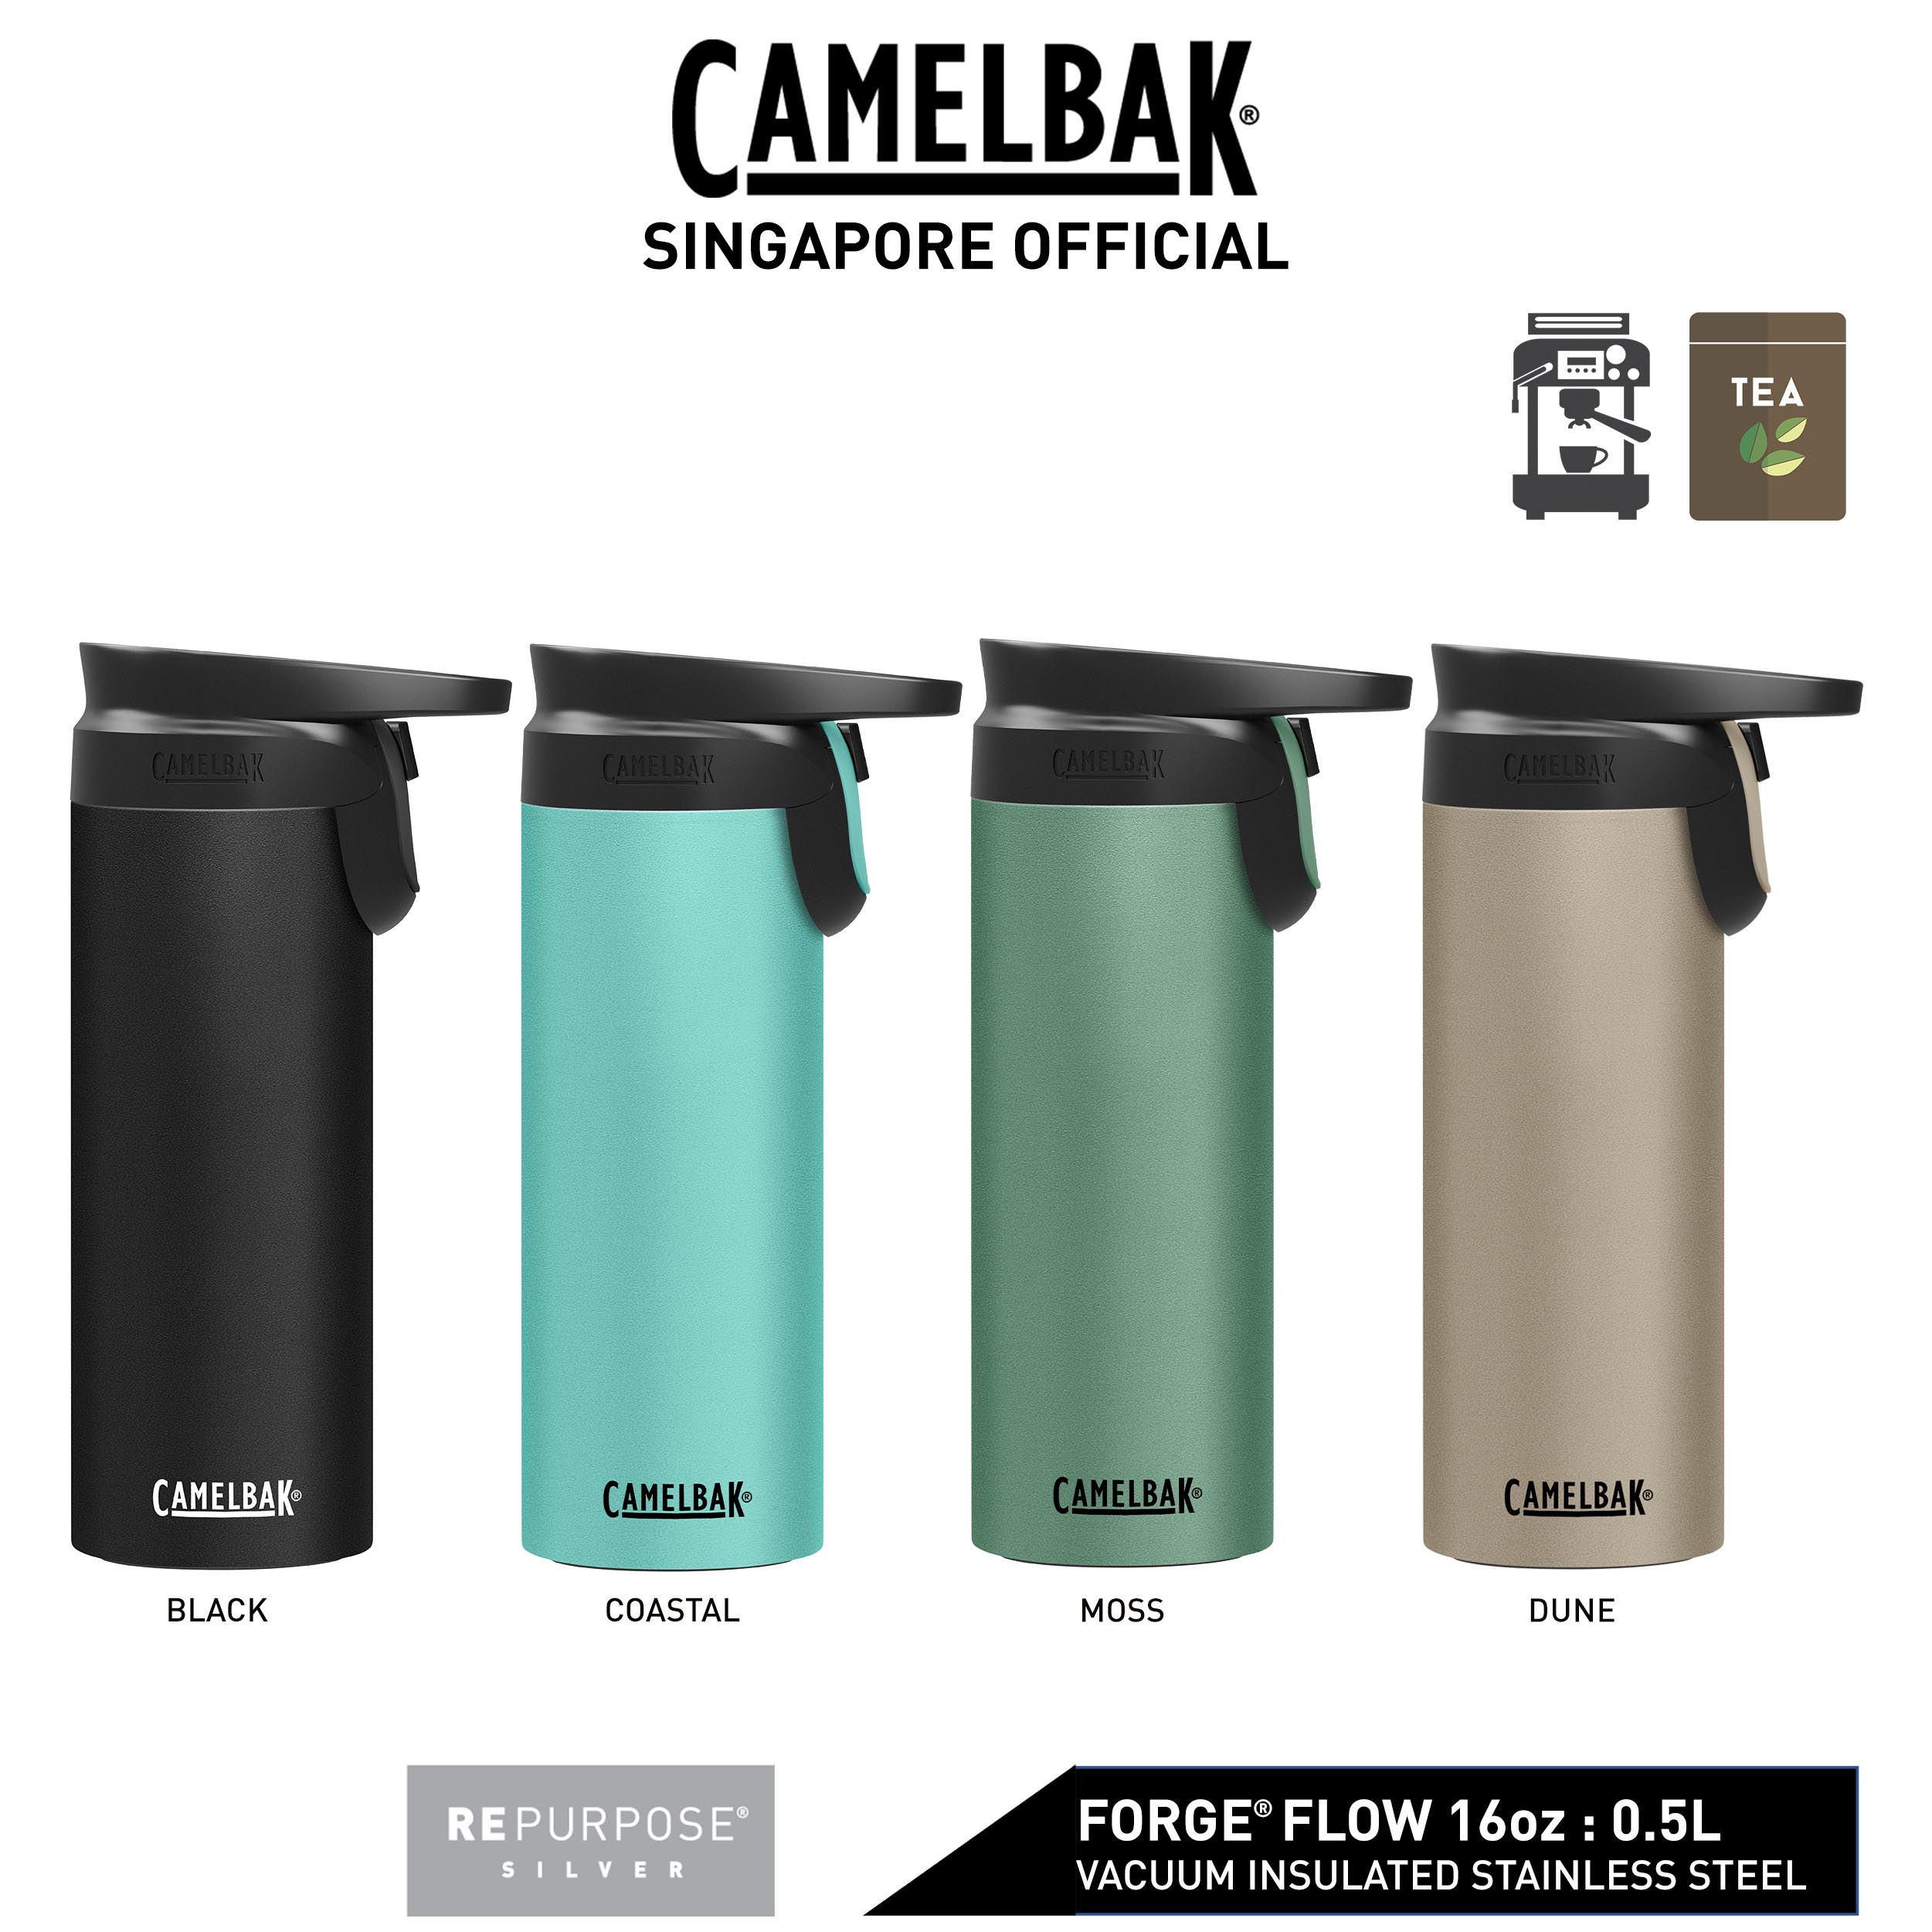 CamelBak Forge Flow Vacuum-Insulated Travel Mug